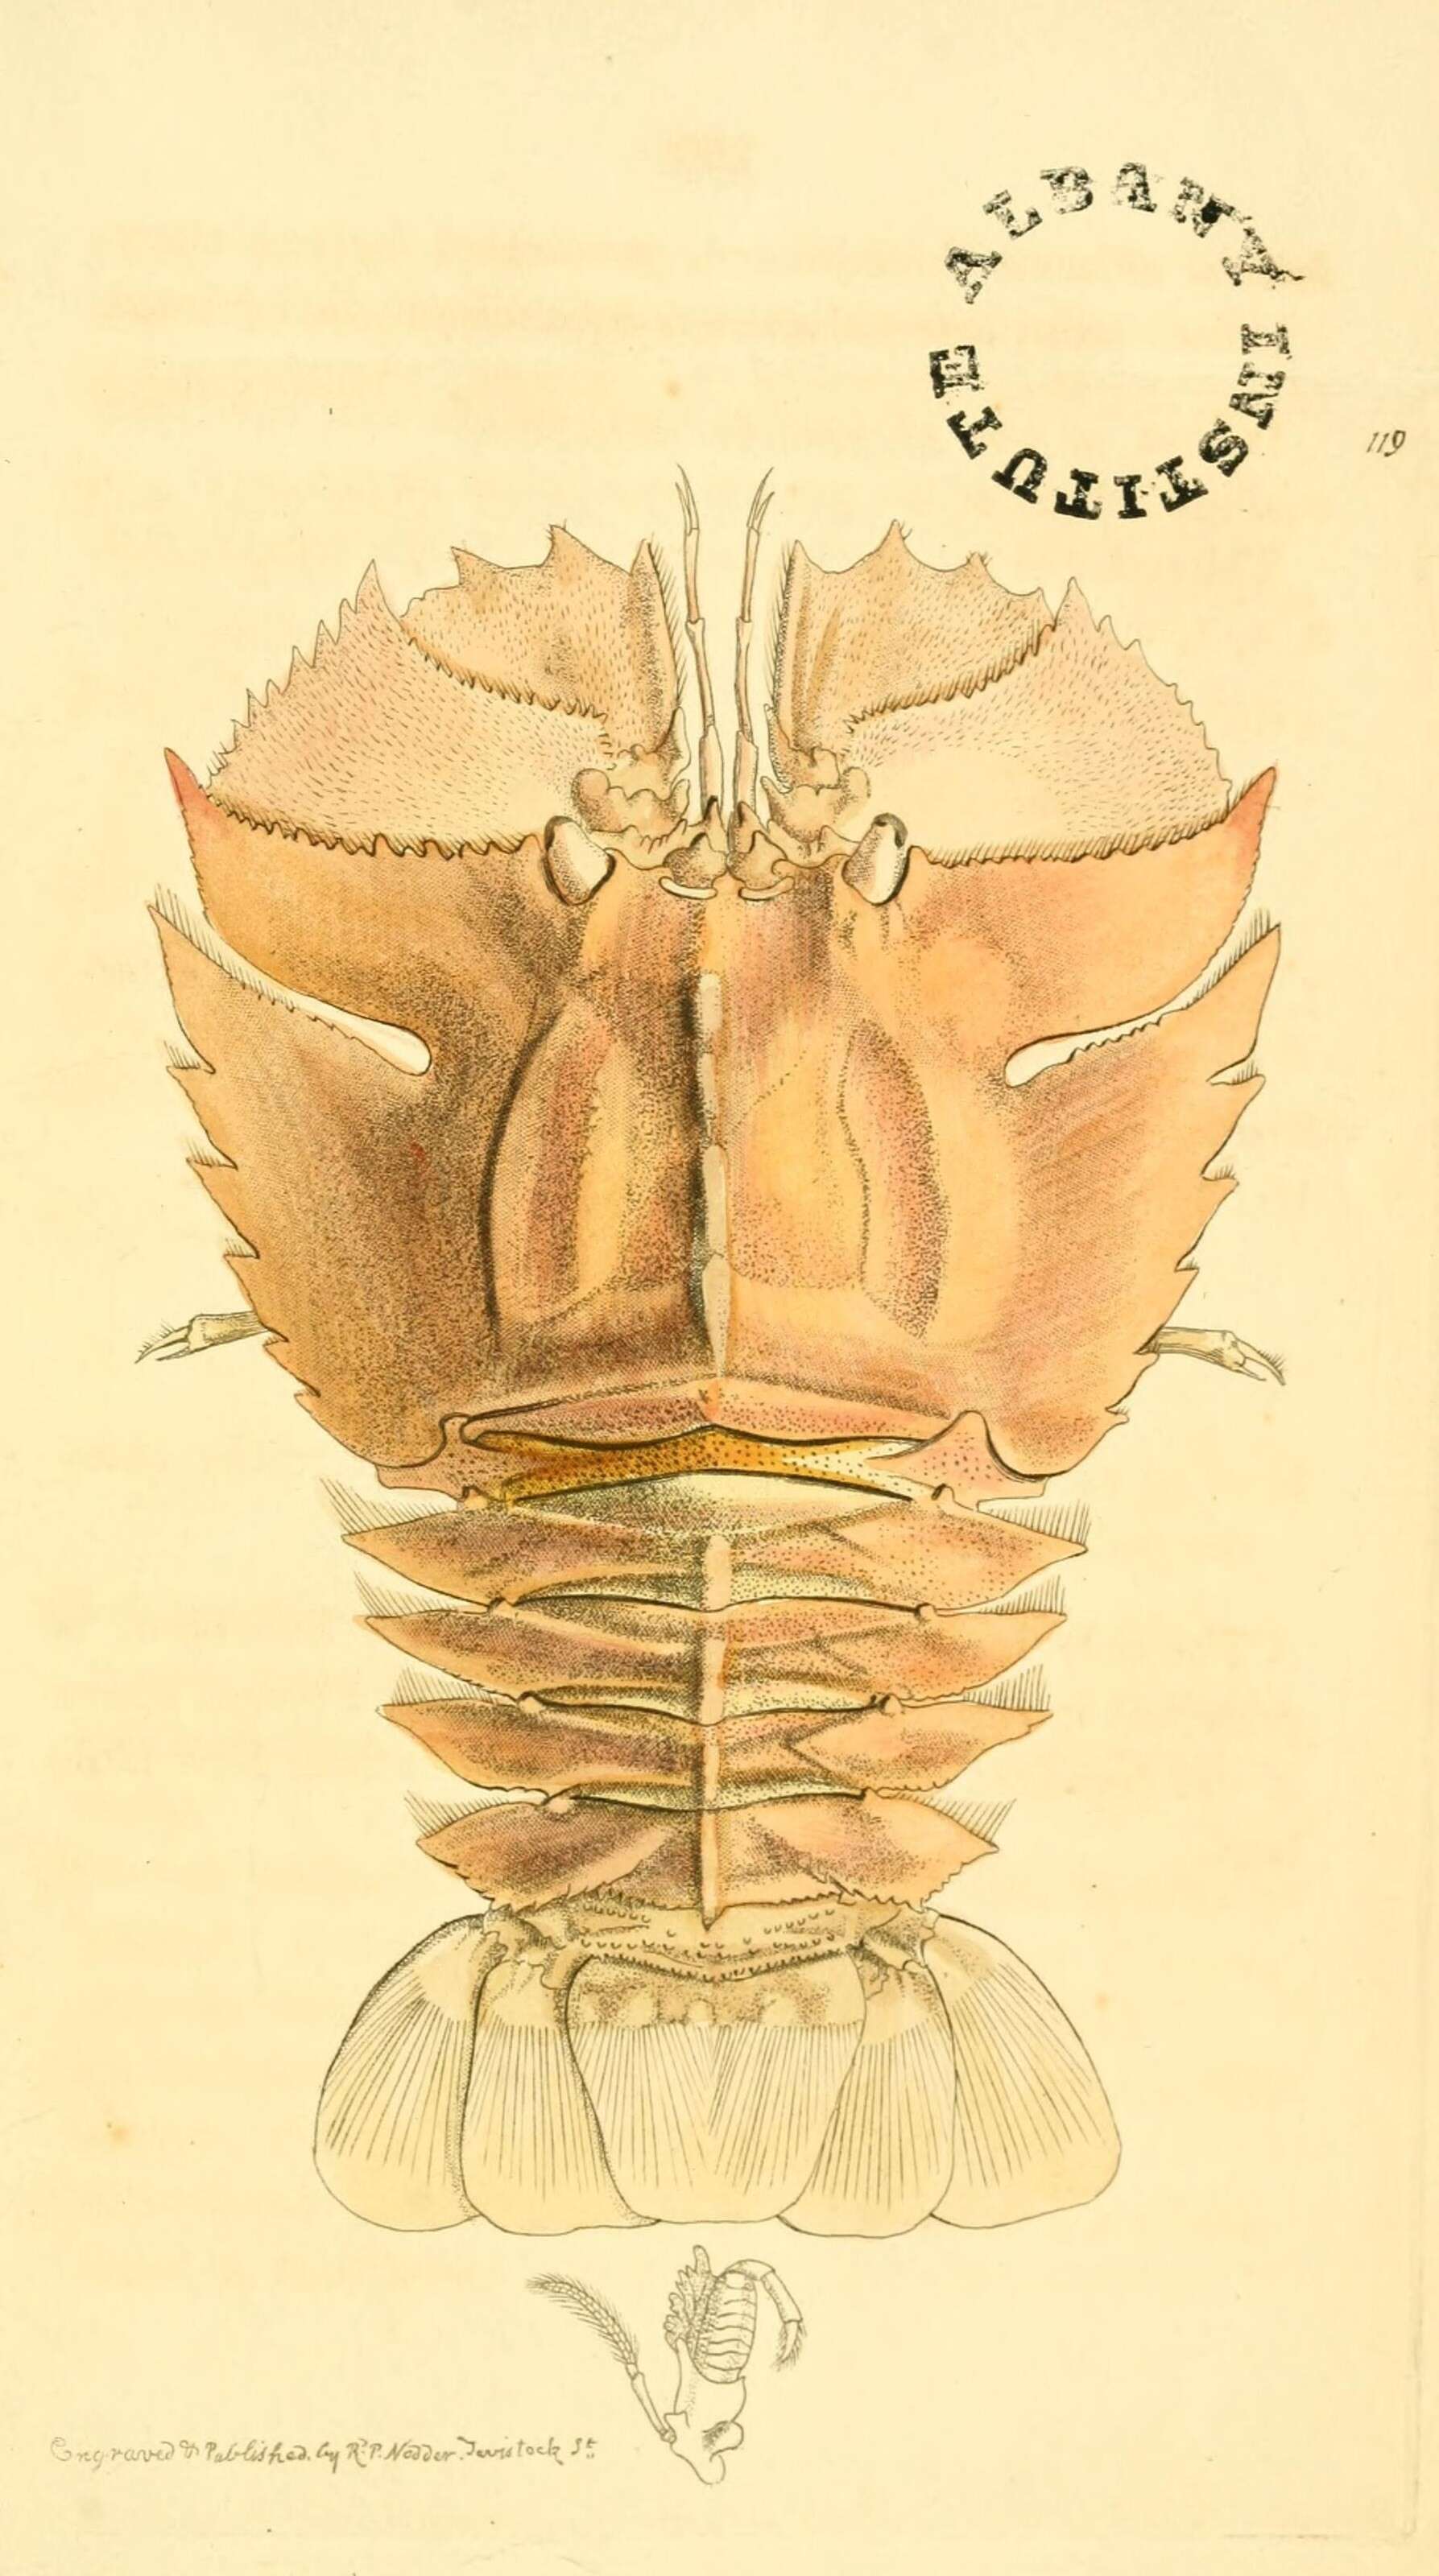 Plancia ëd Ibacus peronii Leach 1815